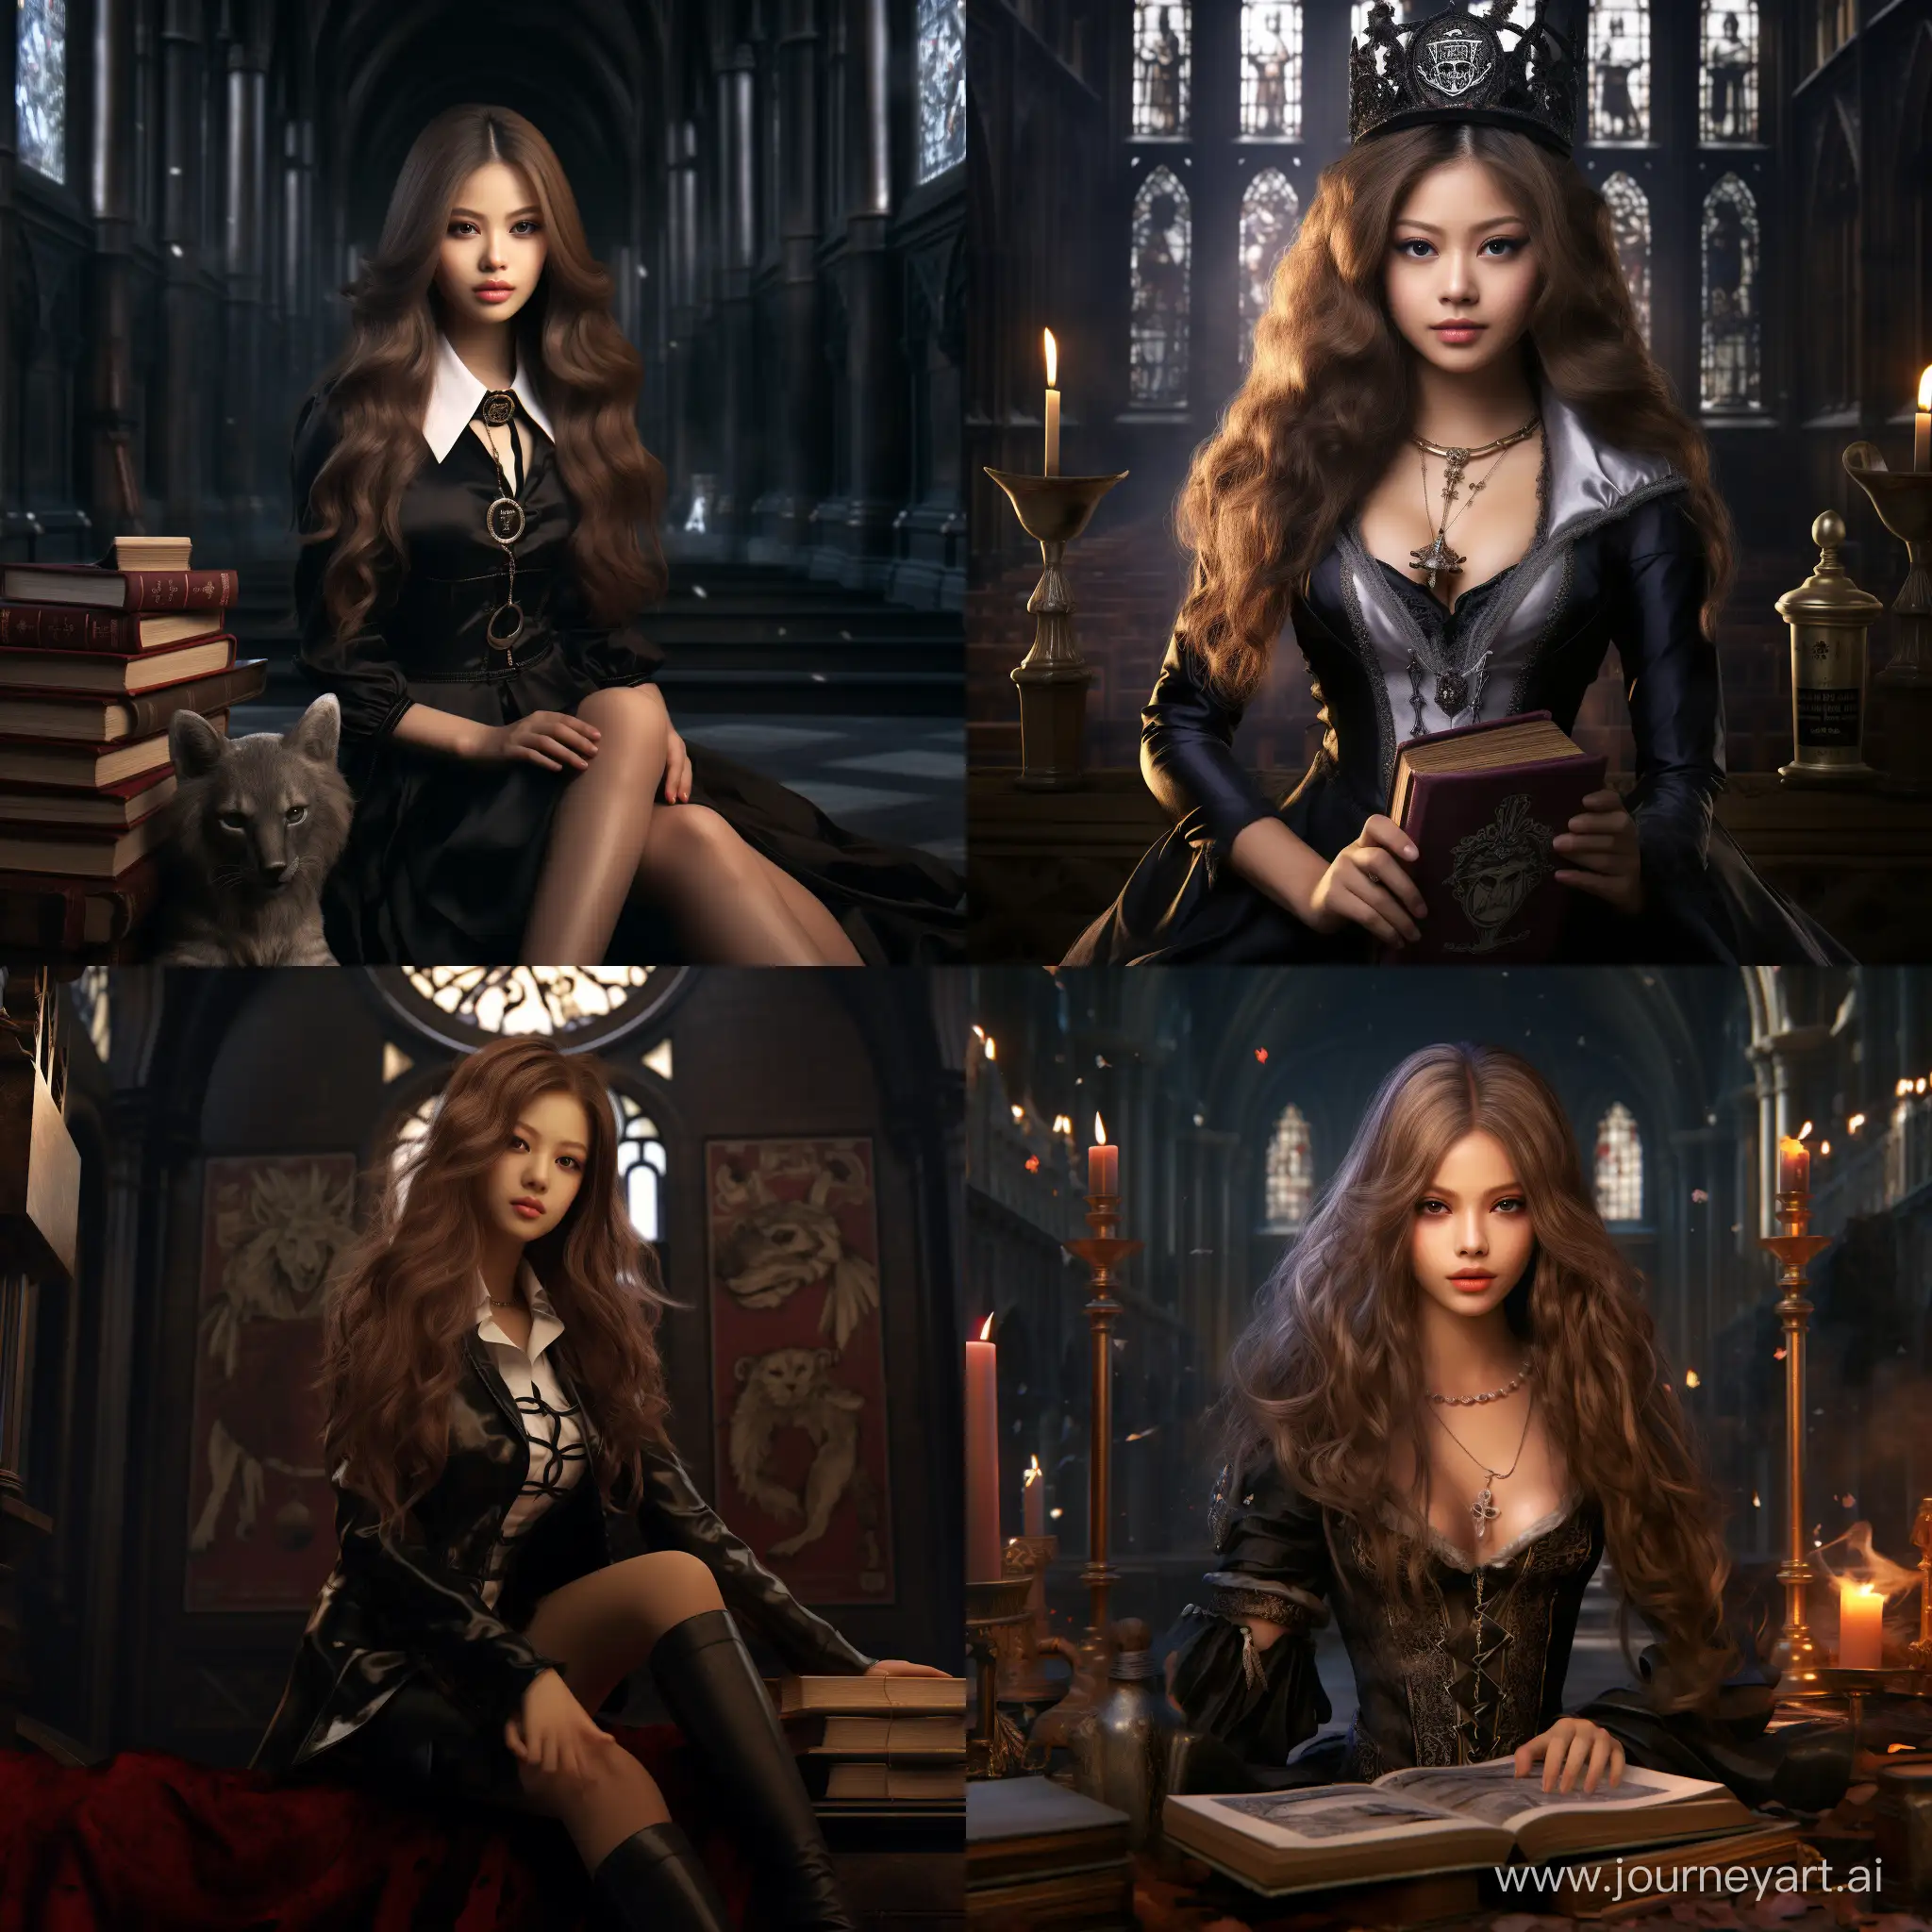 Jennie-from-BLACKPINK-in-Hogwarts-Enchanting-4K-Photorealistic-Portrait